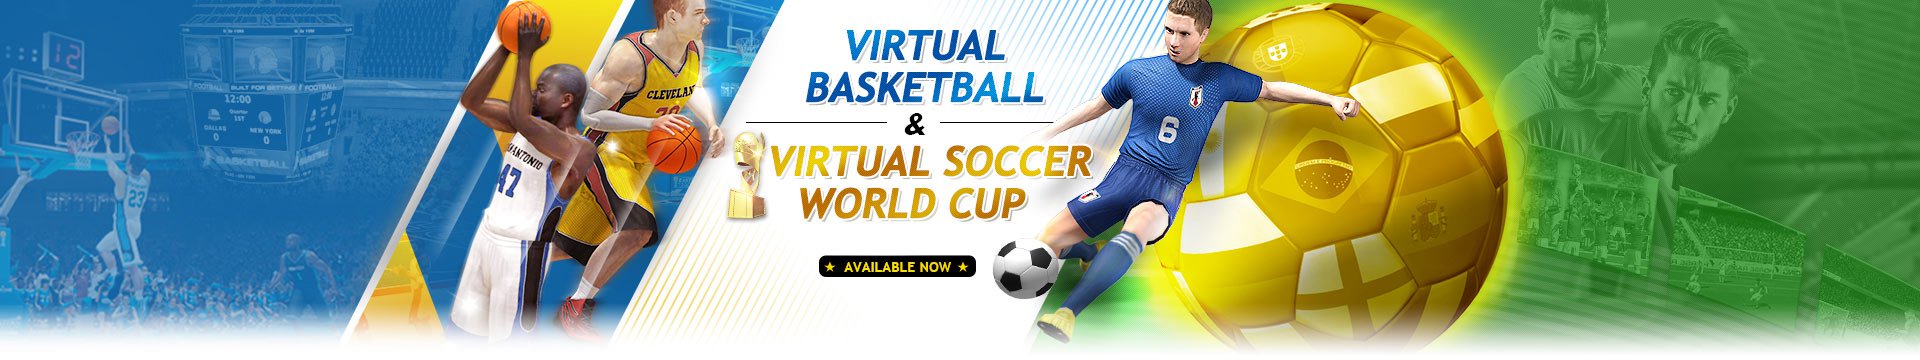 Virtual Basketball & Soccer